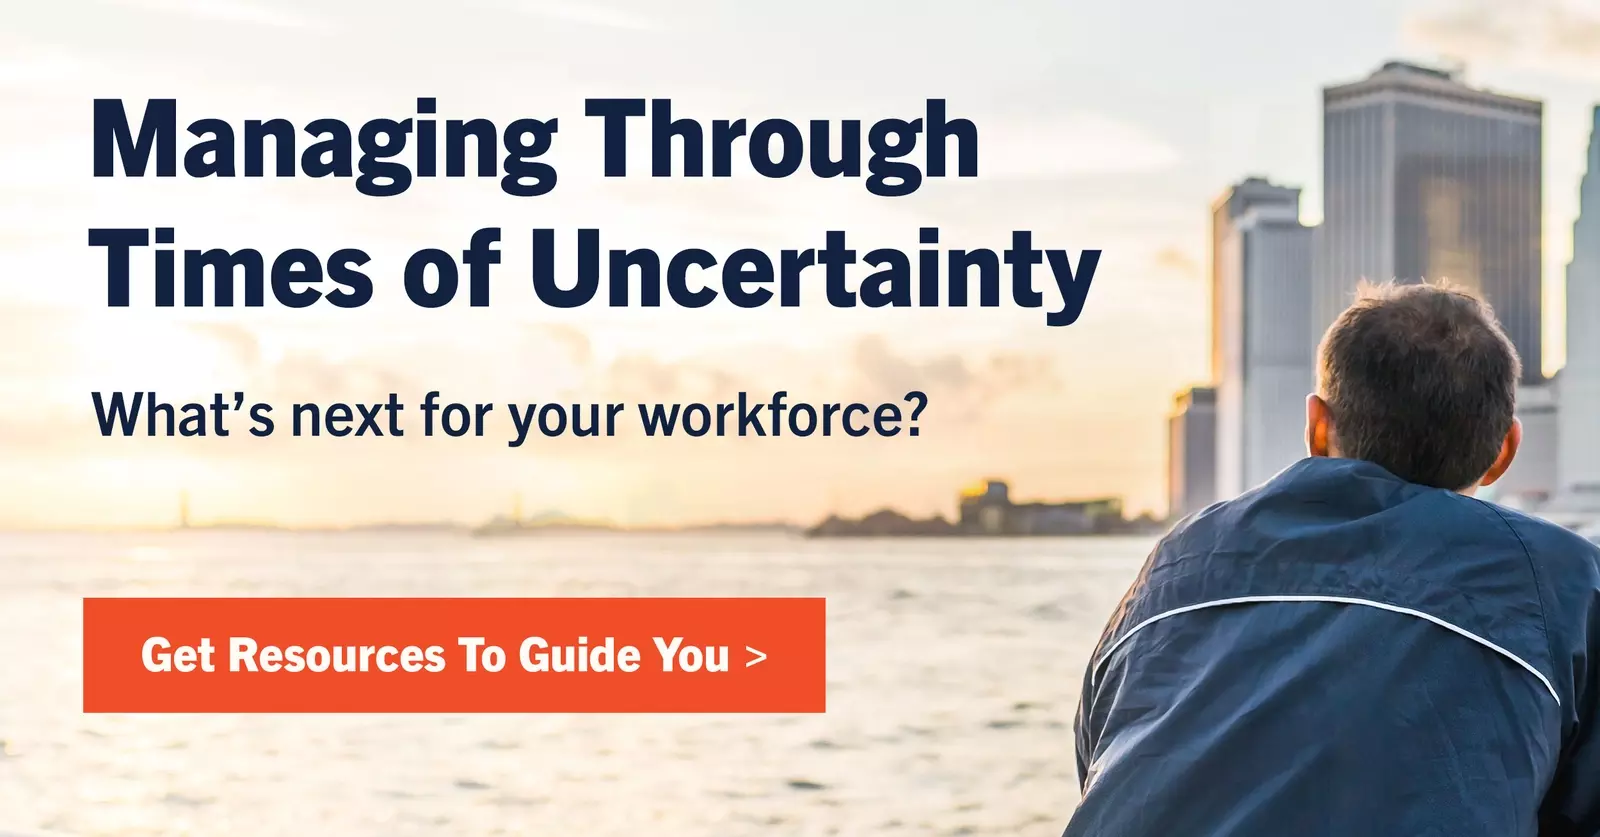 Managing through uncertainty employee flexibility banner